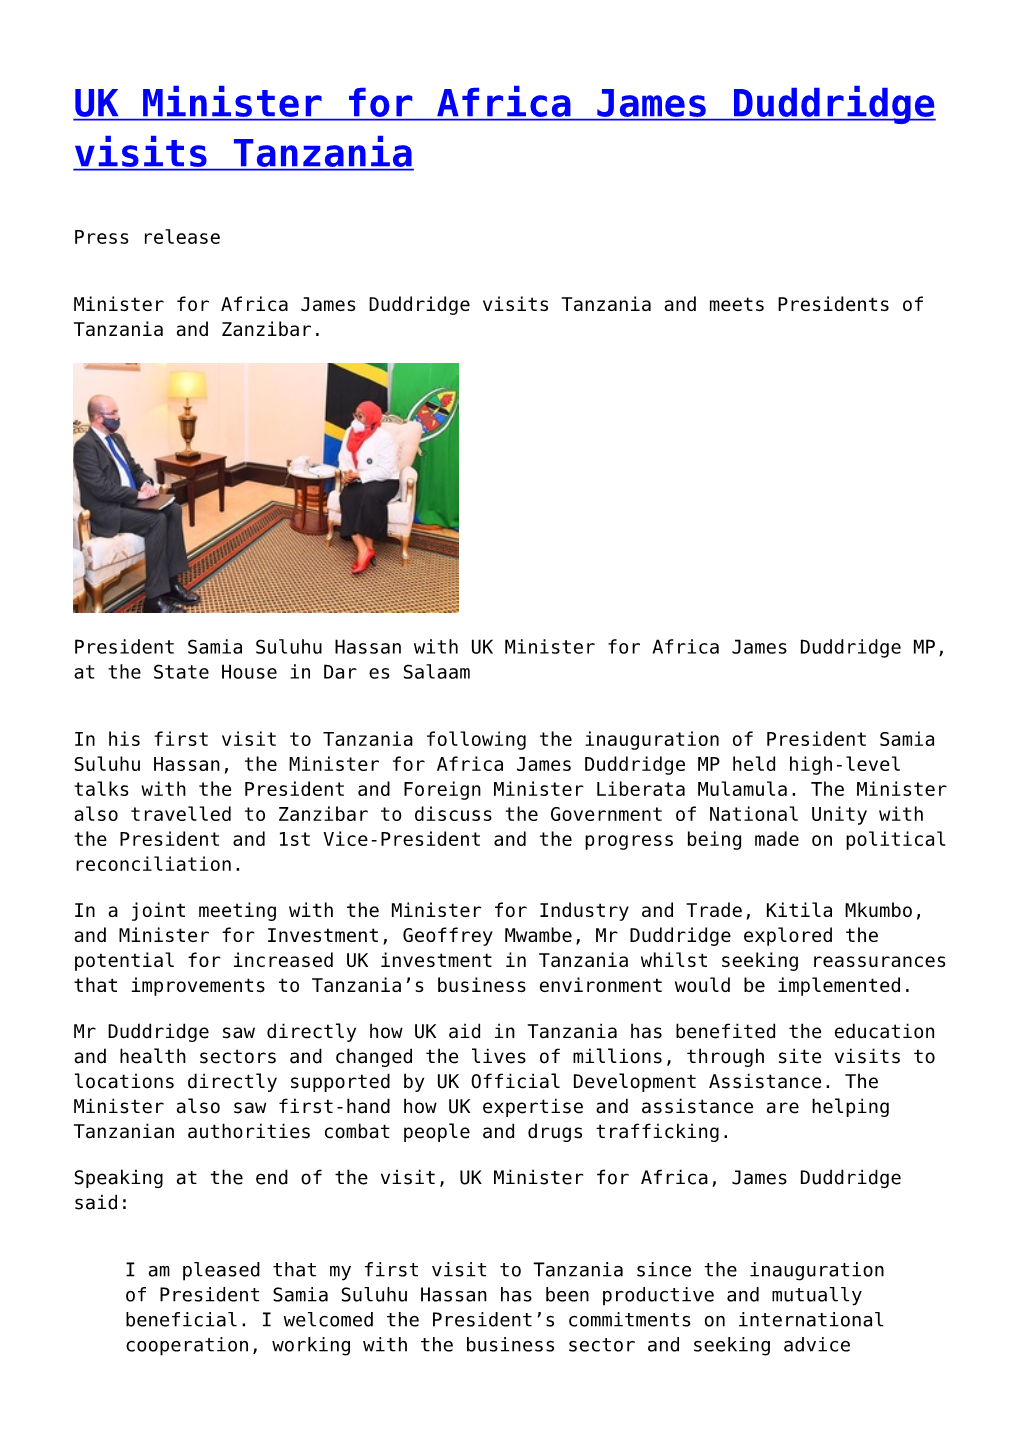 UK Minister for Africa James Duddridge Visits Tanzania